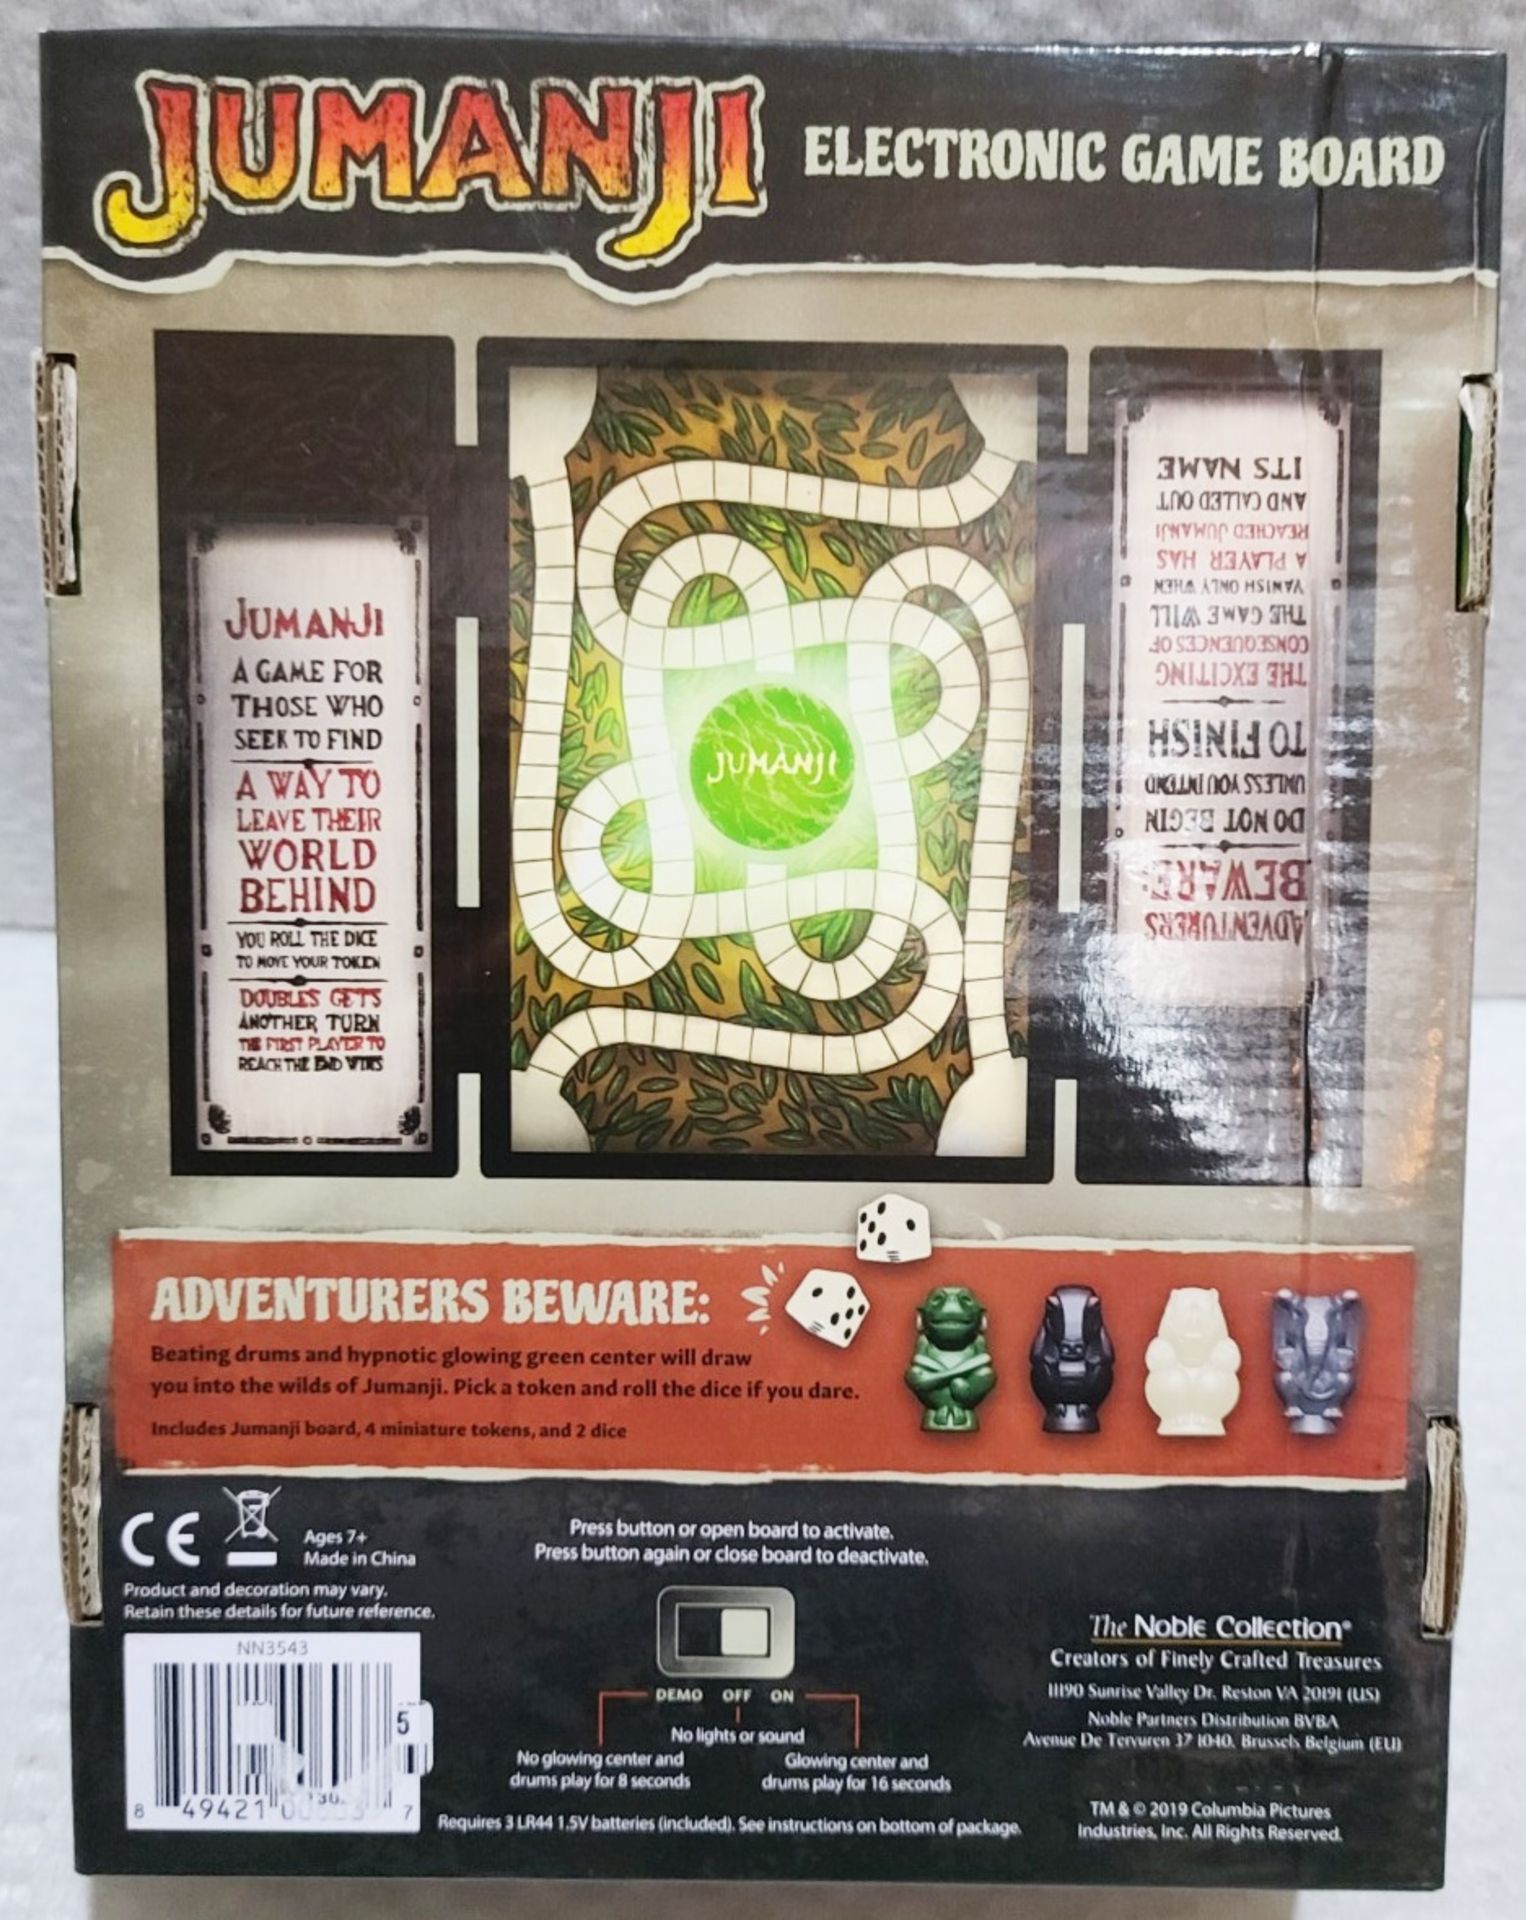 1 x JUMANJI Mini Prop Electronic Board Game - Original Price £22.00 - Unused Boxed Stock - Ref: - Image 3 of 3